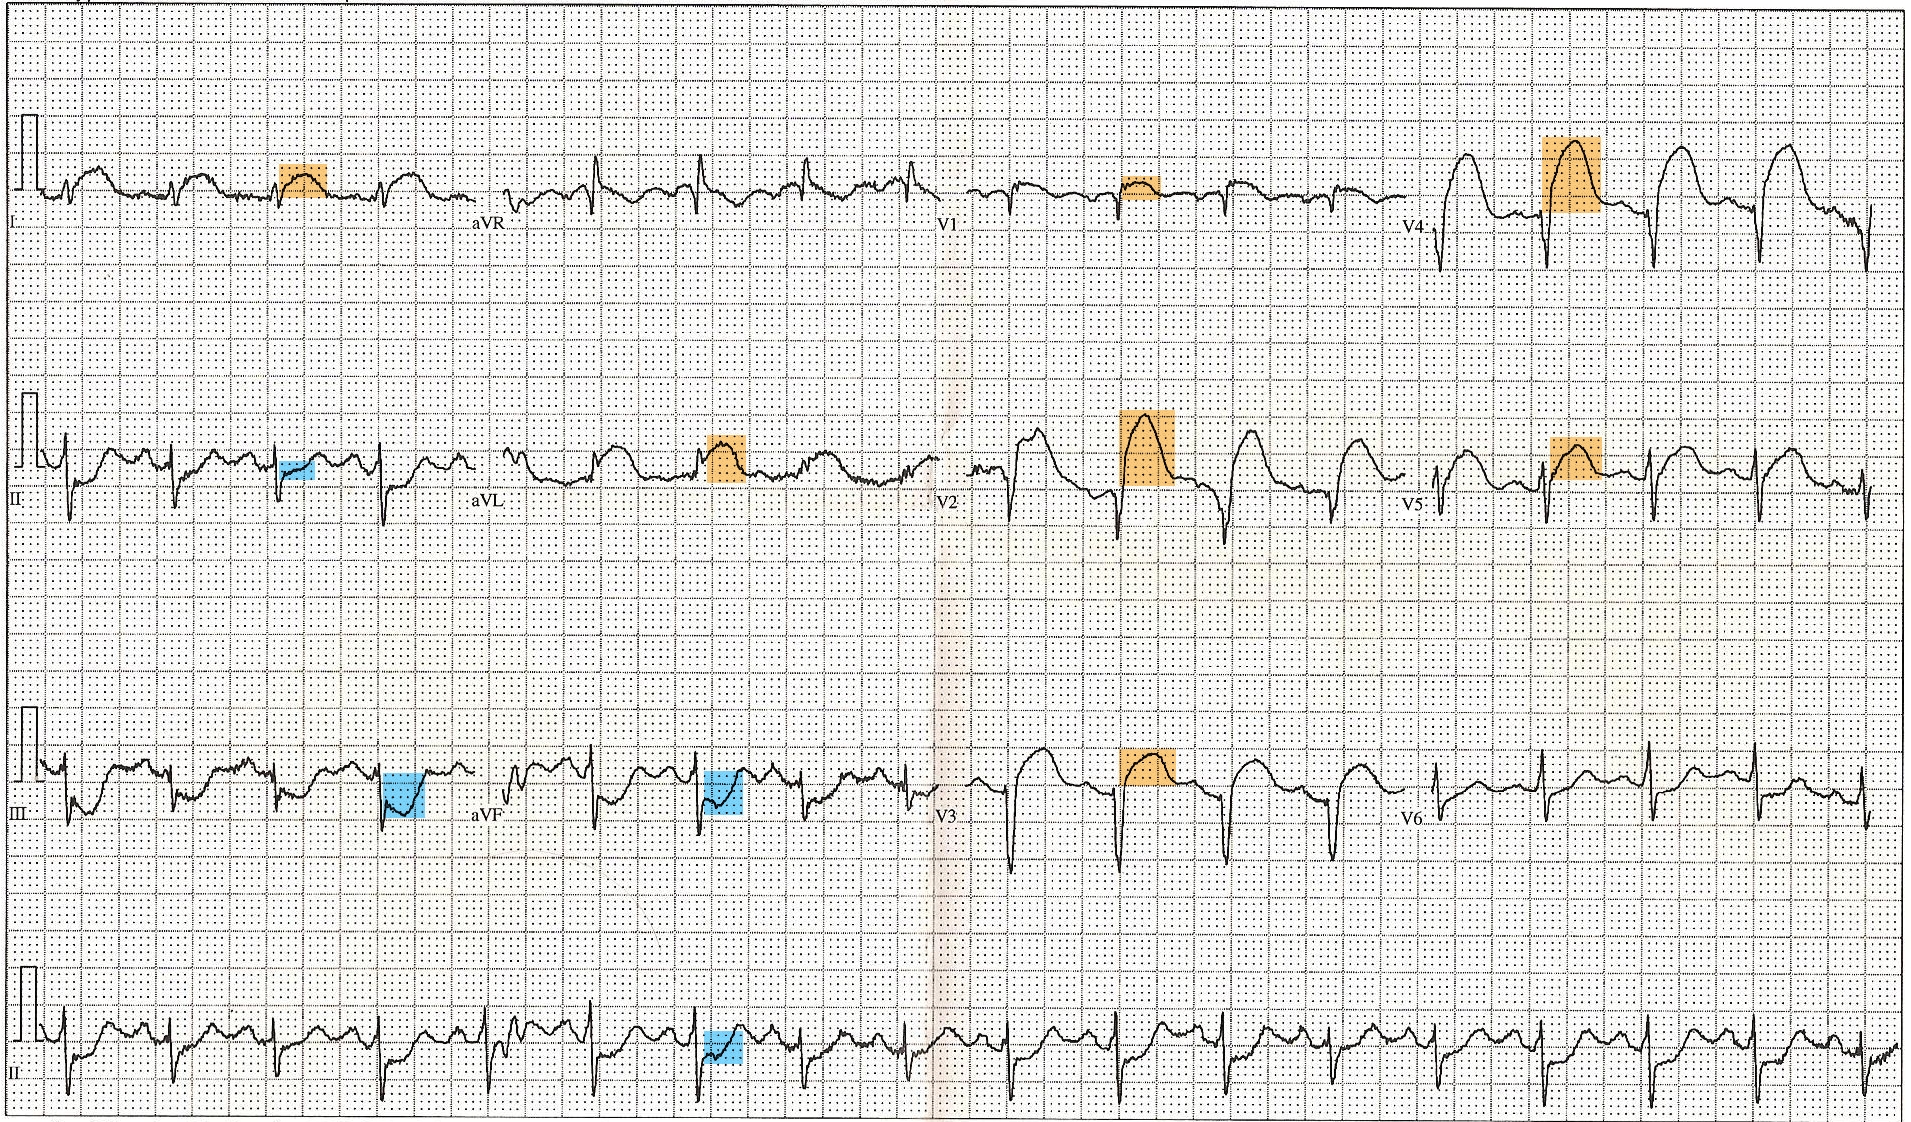 12 Lead ECG EKG showing ST Elevation (STEMI), Tachycardia, Anterior Fascicular Block, Anterior Infarct, Heart Attack